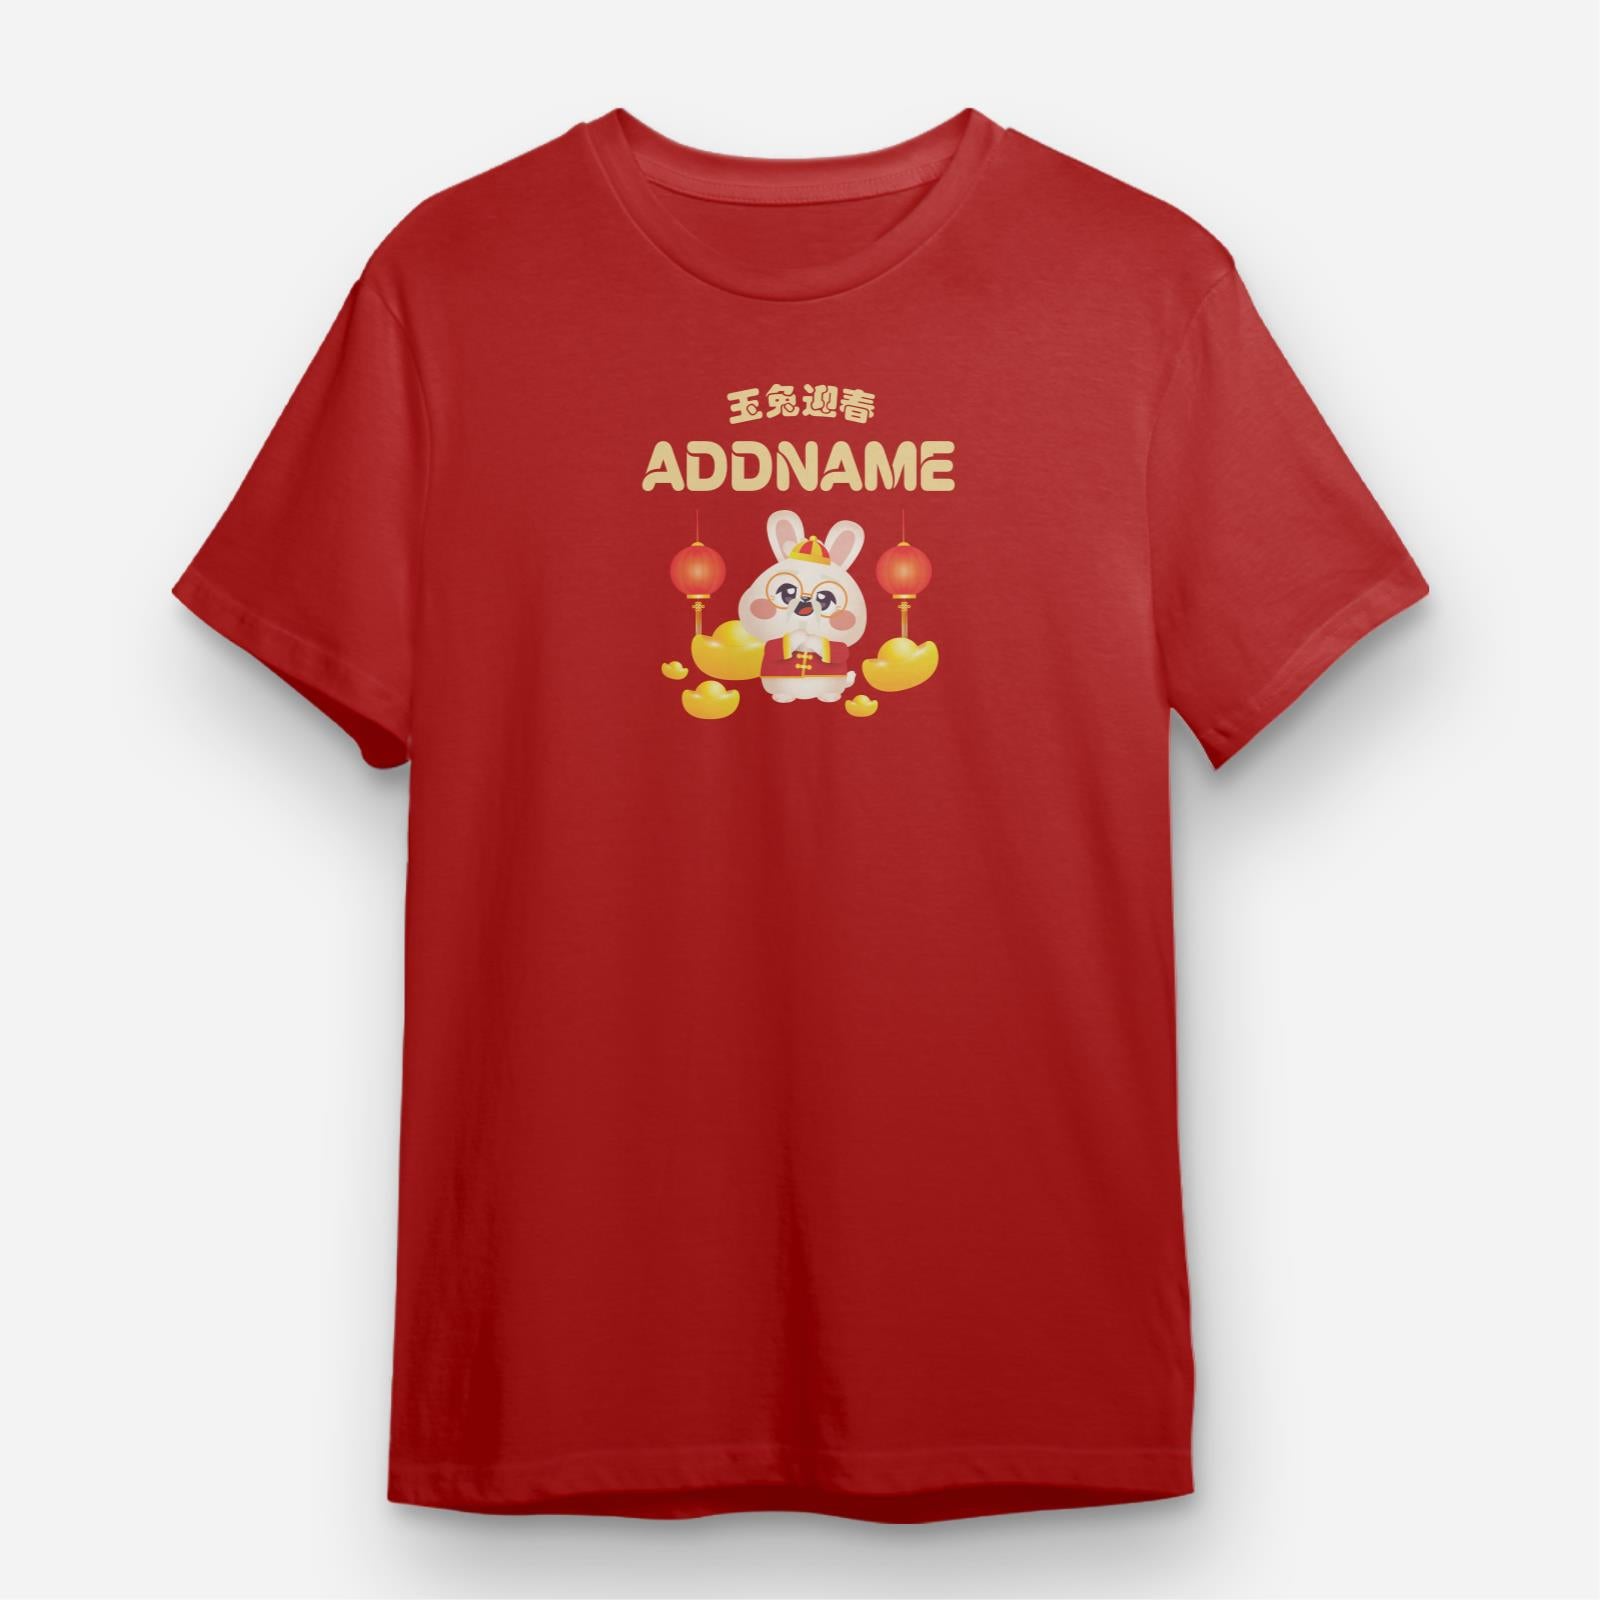 Cny Rabbit Family - Grandpa Rabbit Unisex Tee Shirt with English Personalization